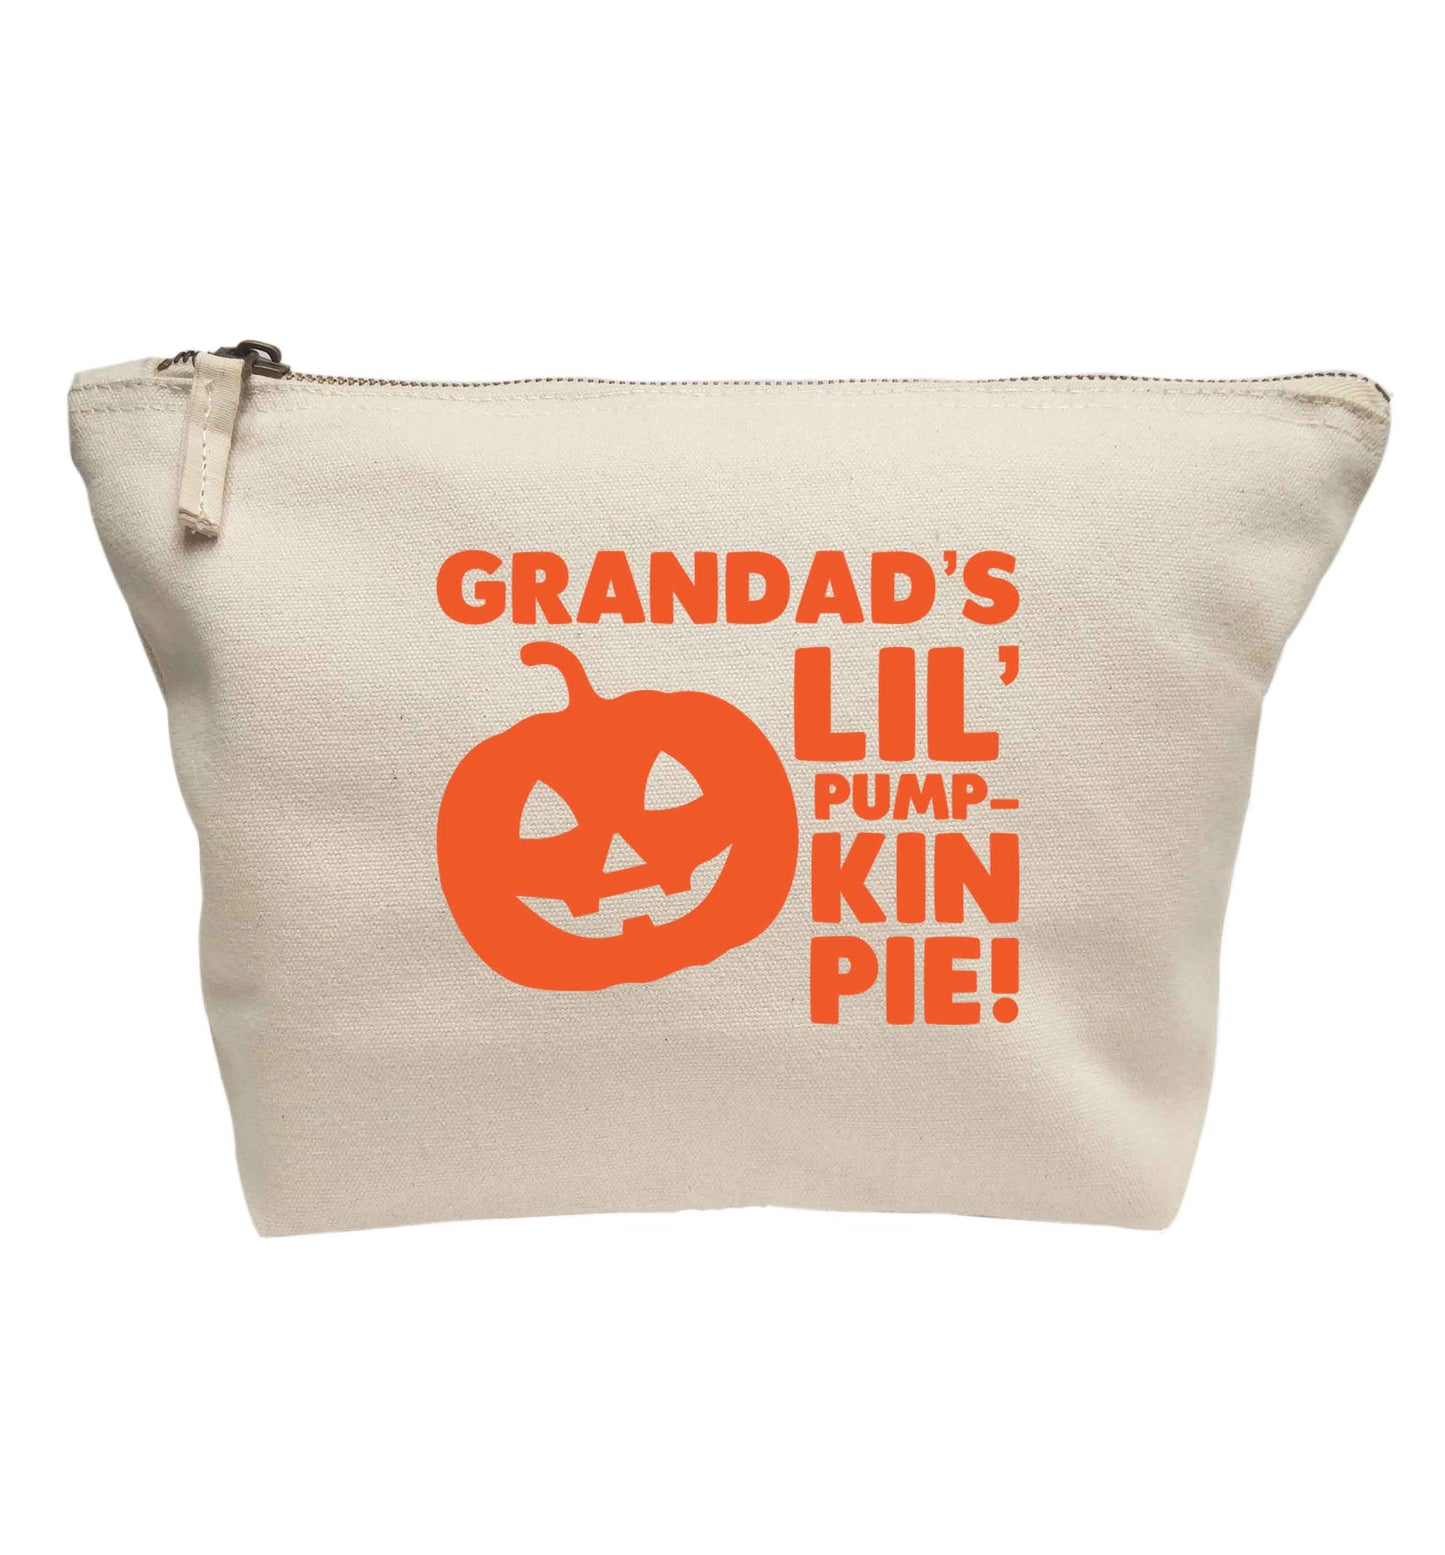 Grandad's lil' pumpkin pie | Makeup / wash bag